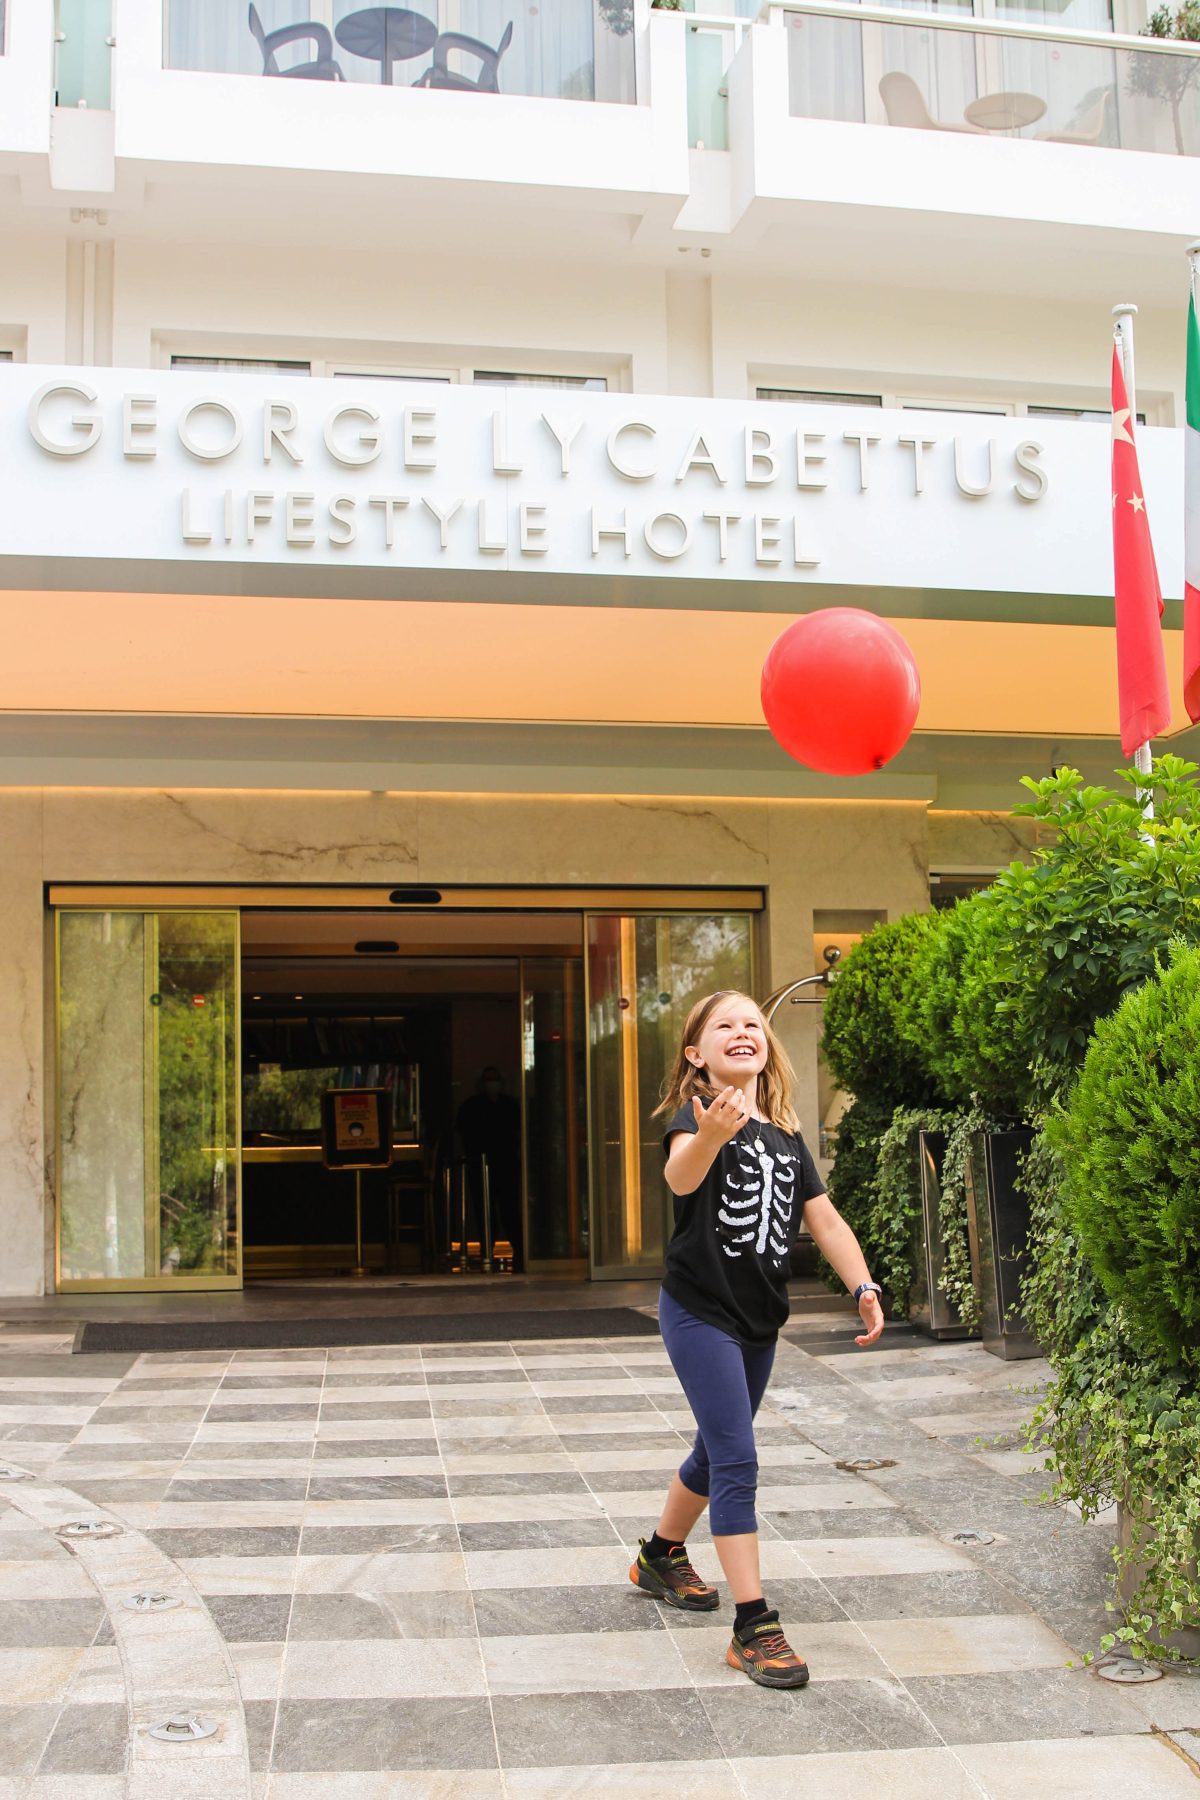 St. George Lycabettus Hotel, Athens, Greece